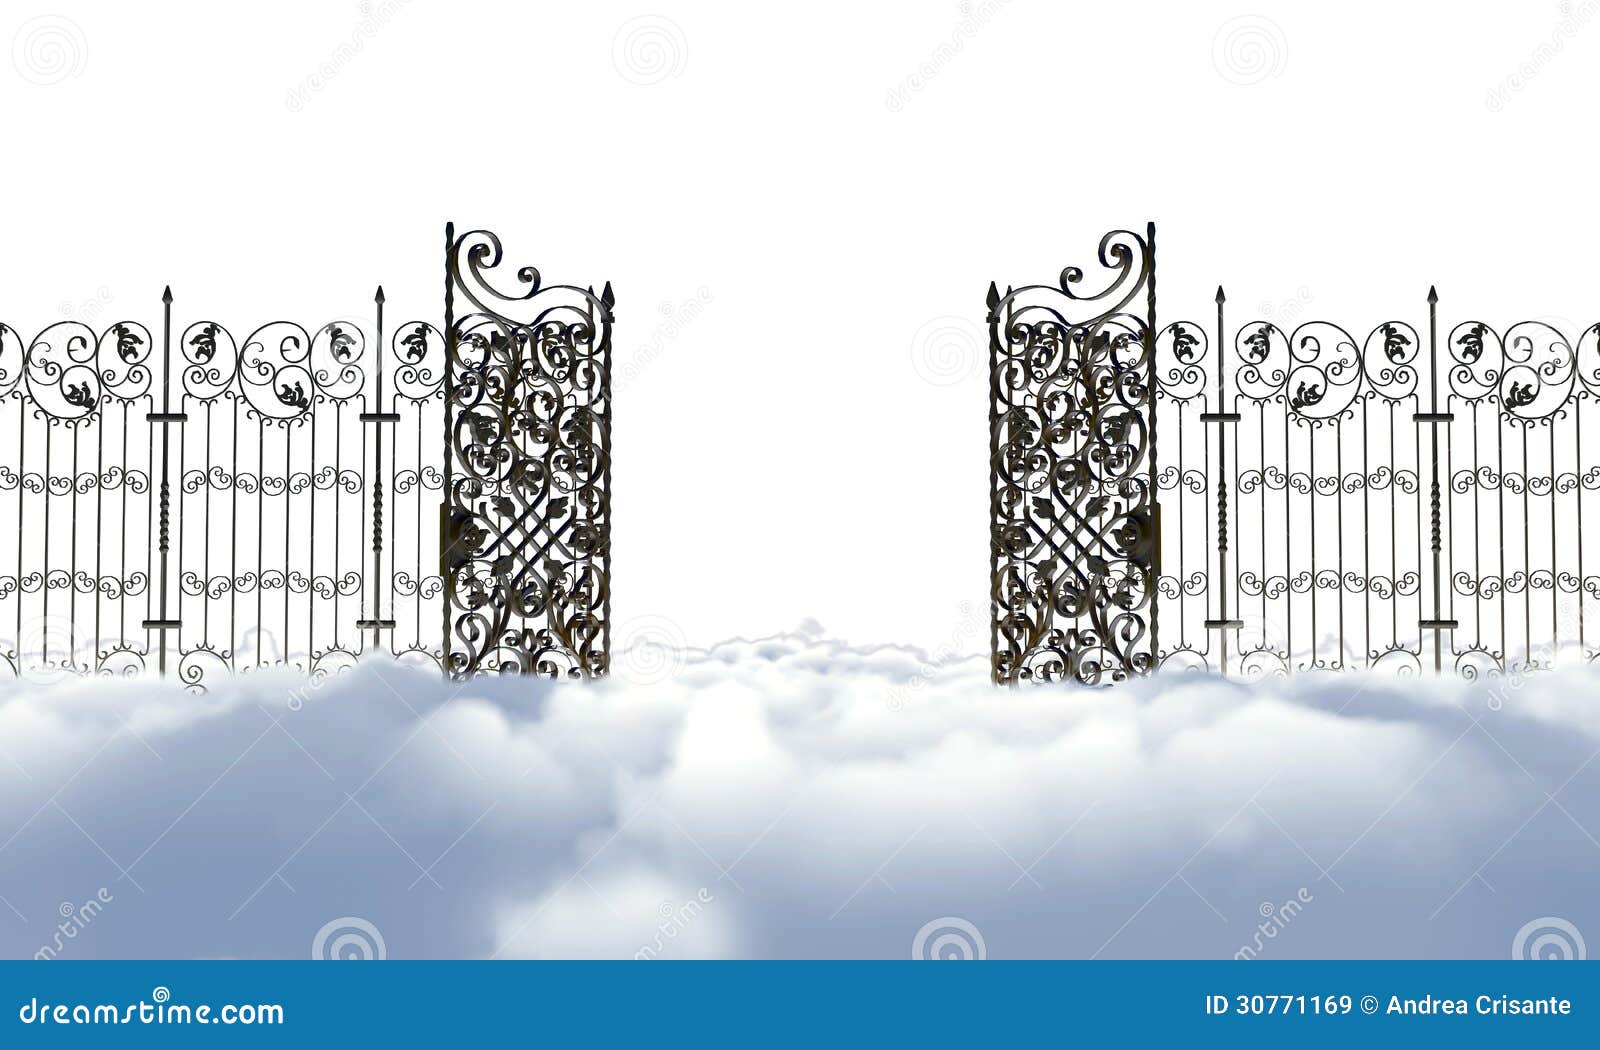 heaven's gate clip art free - photo #6